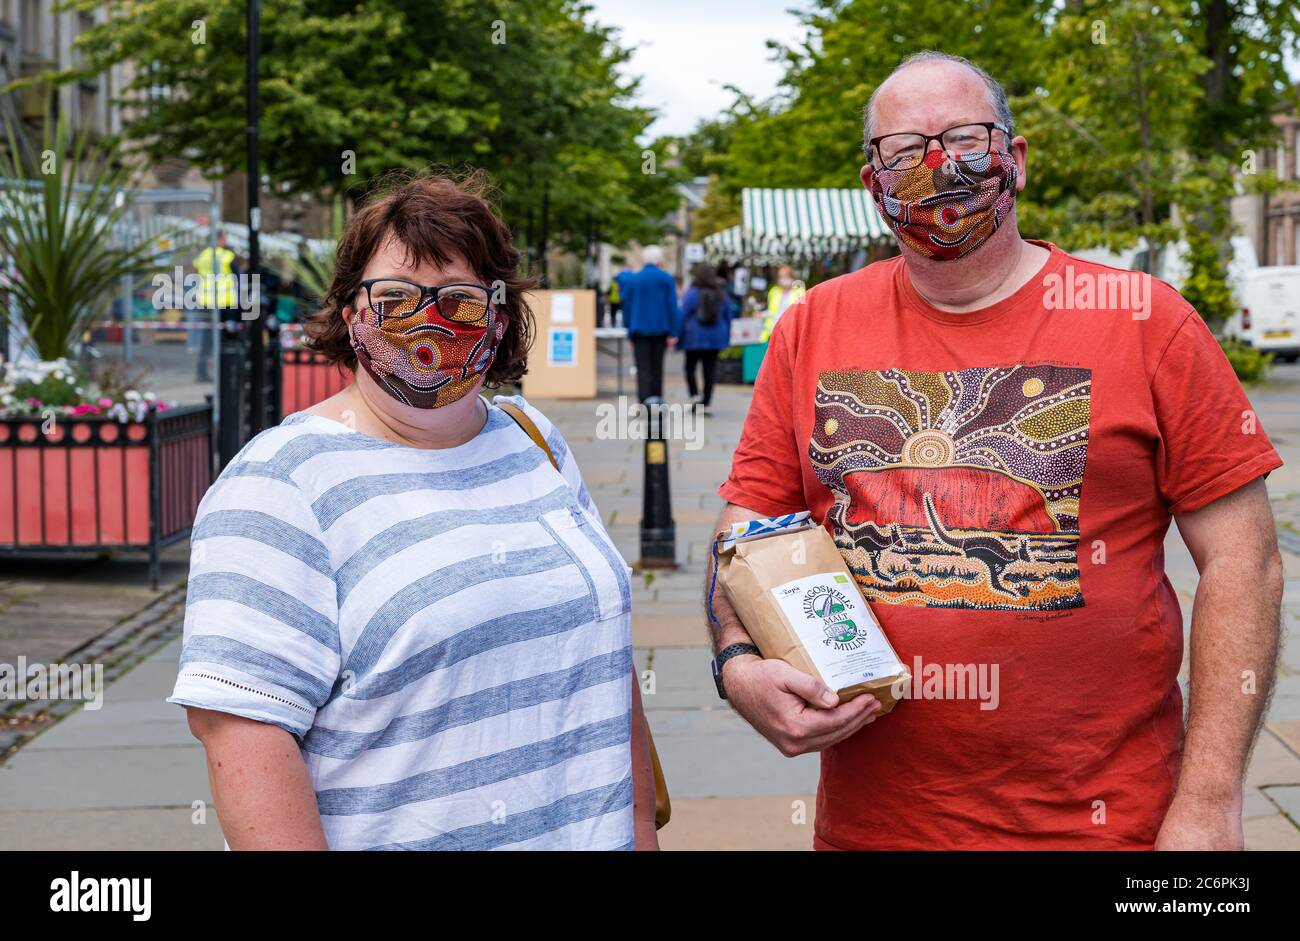 A couple wearing matching homemade face masks at Farmers Market during Covid-19 pandemic, Haddington, East Lothian, Scotland, UK Stock Photo